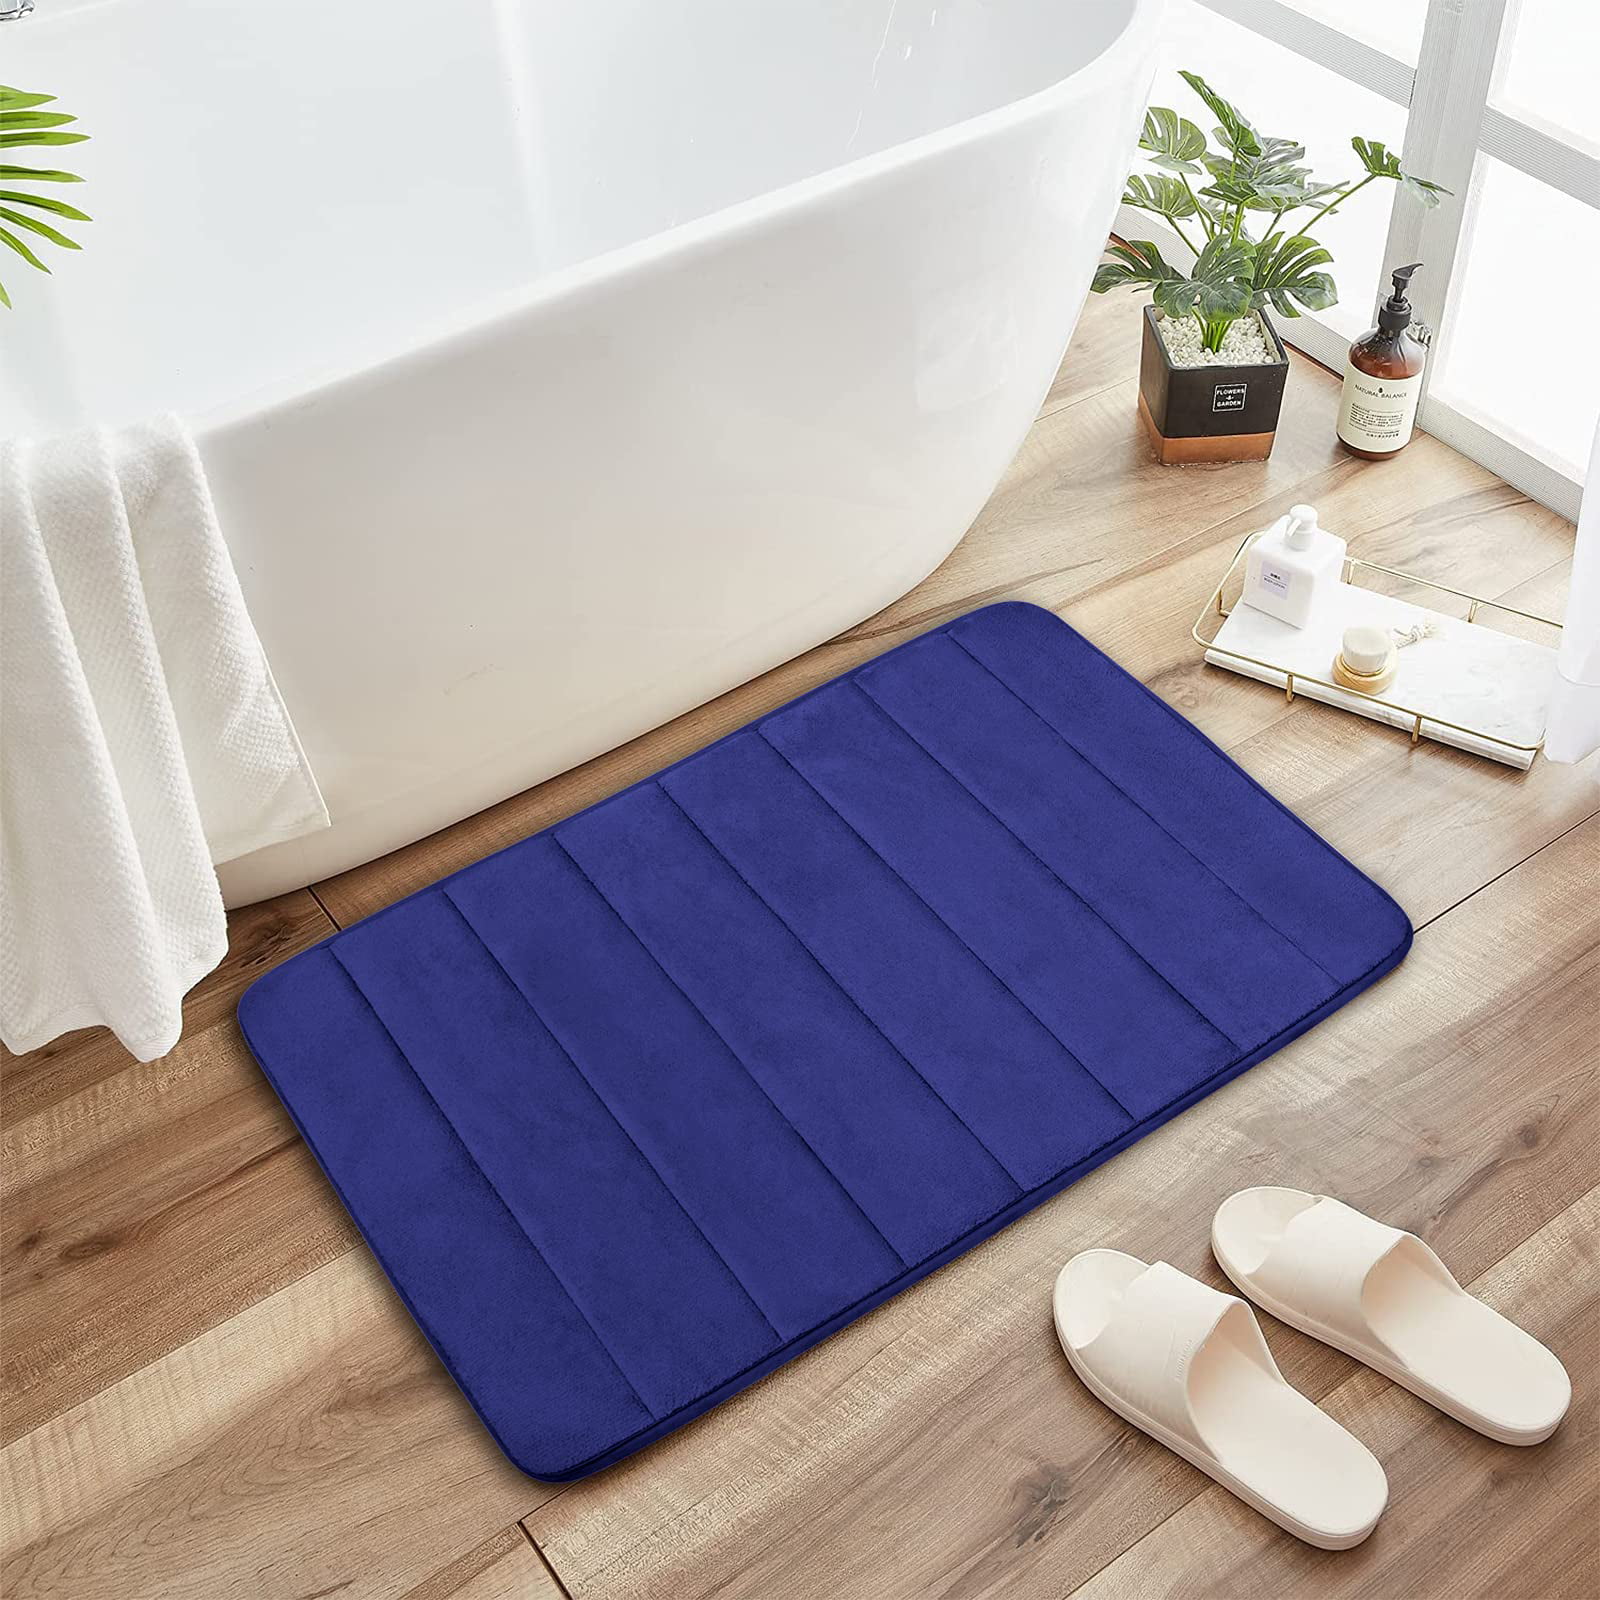 New Absorbent Soft Memory Foam Bath Bathroom Floor Shower Mat Rug Non-slip 8 